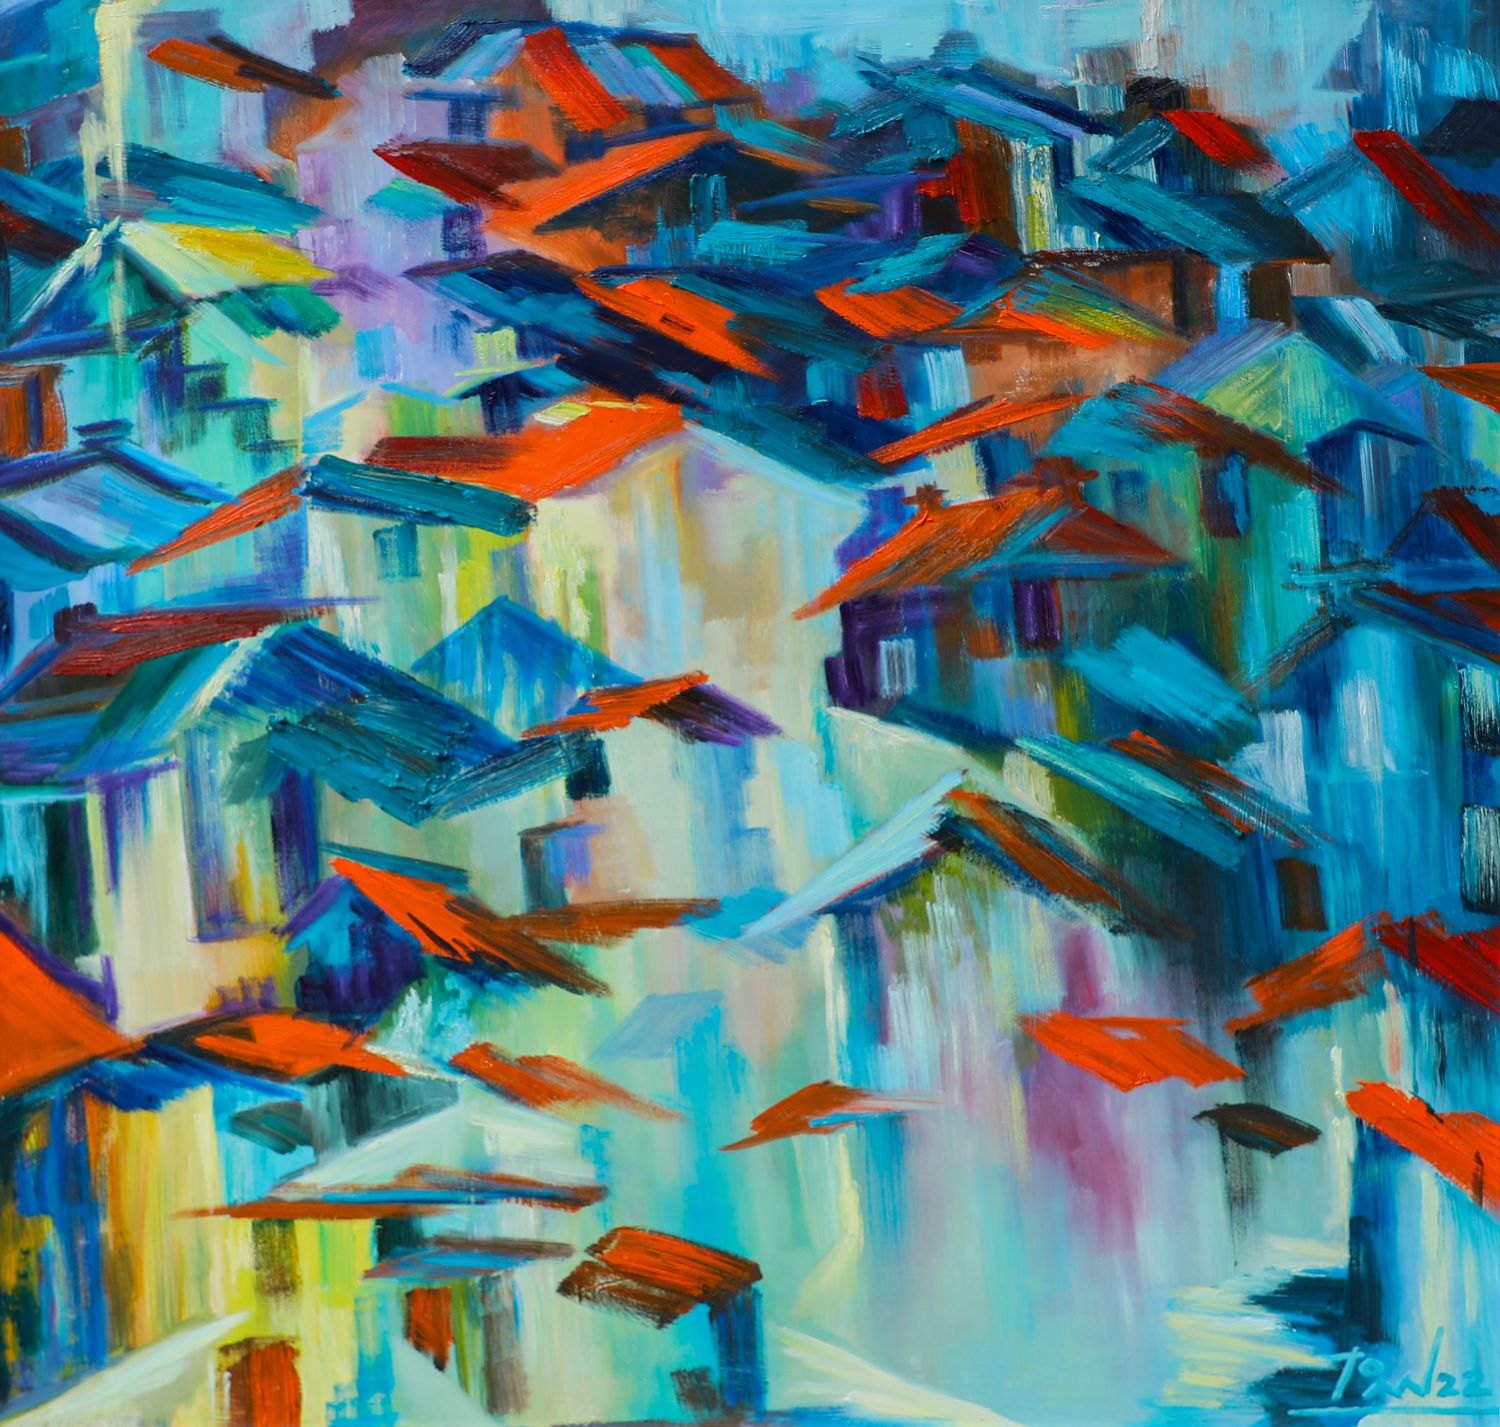 Rhythm of the Rain - Vietnamese Oil Painting by Artist Dau Quang Toan